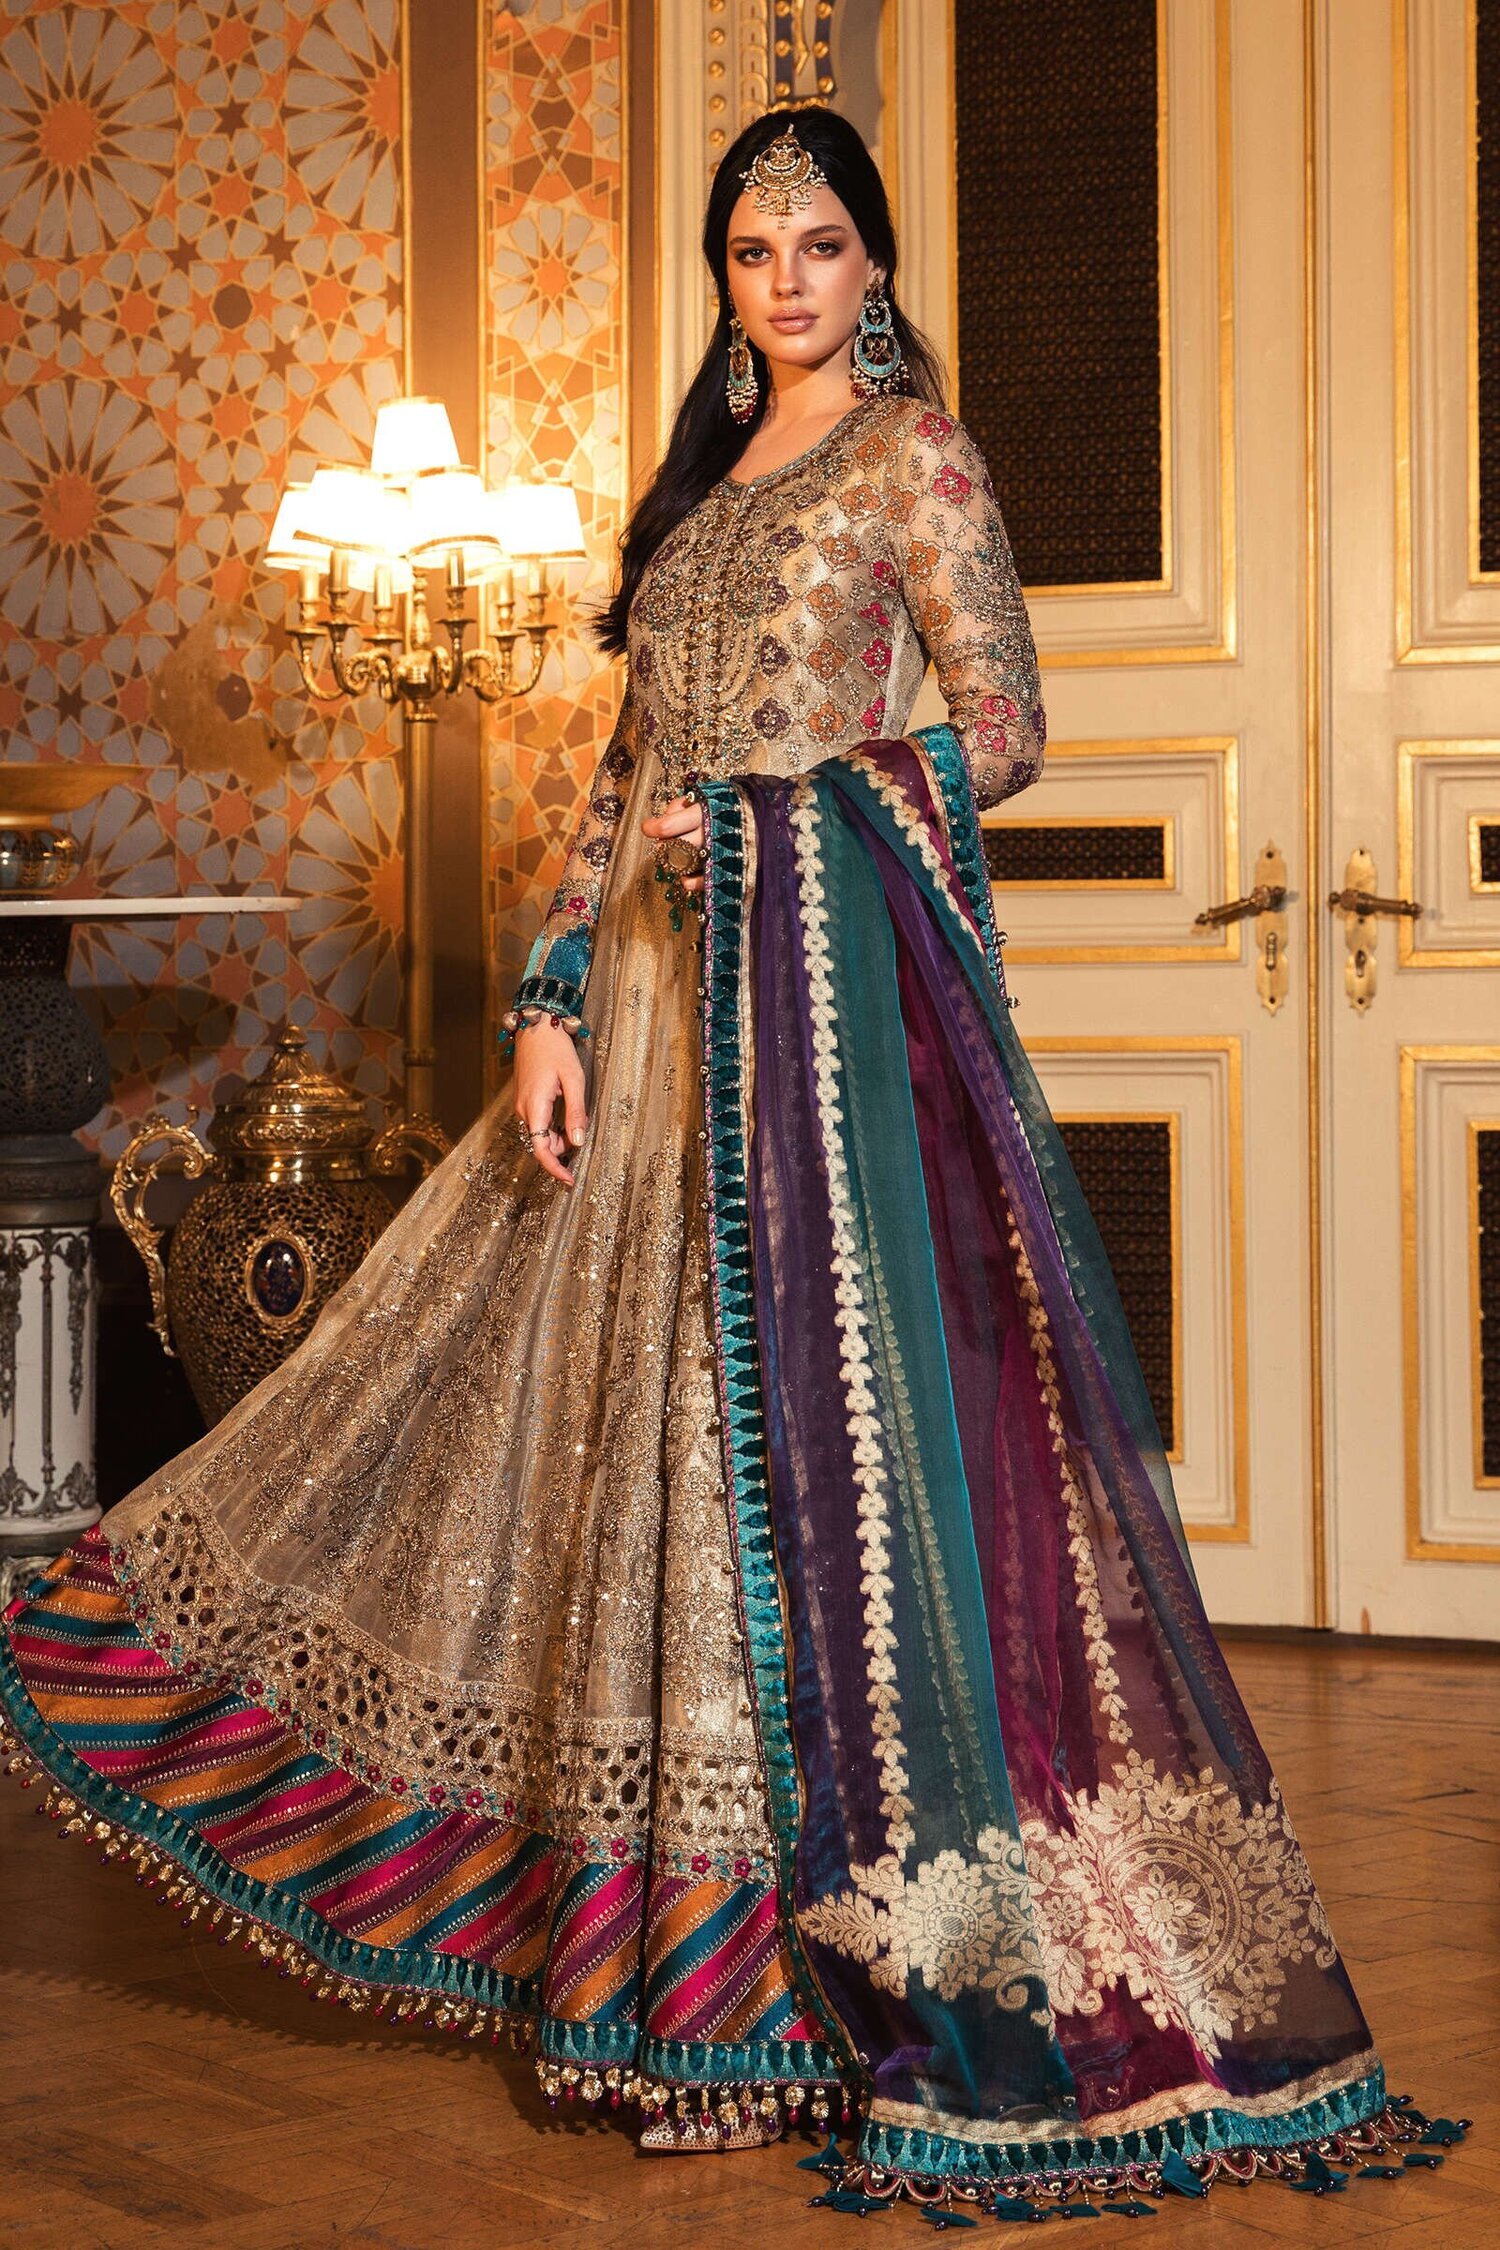 Brij Valusha Silk Salwar Suit Catalog 8 Pcs - Suratfabric.com